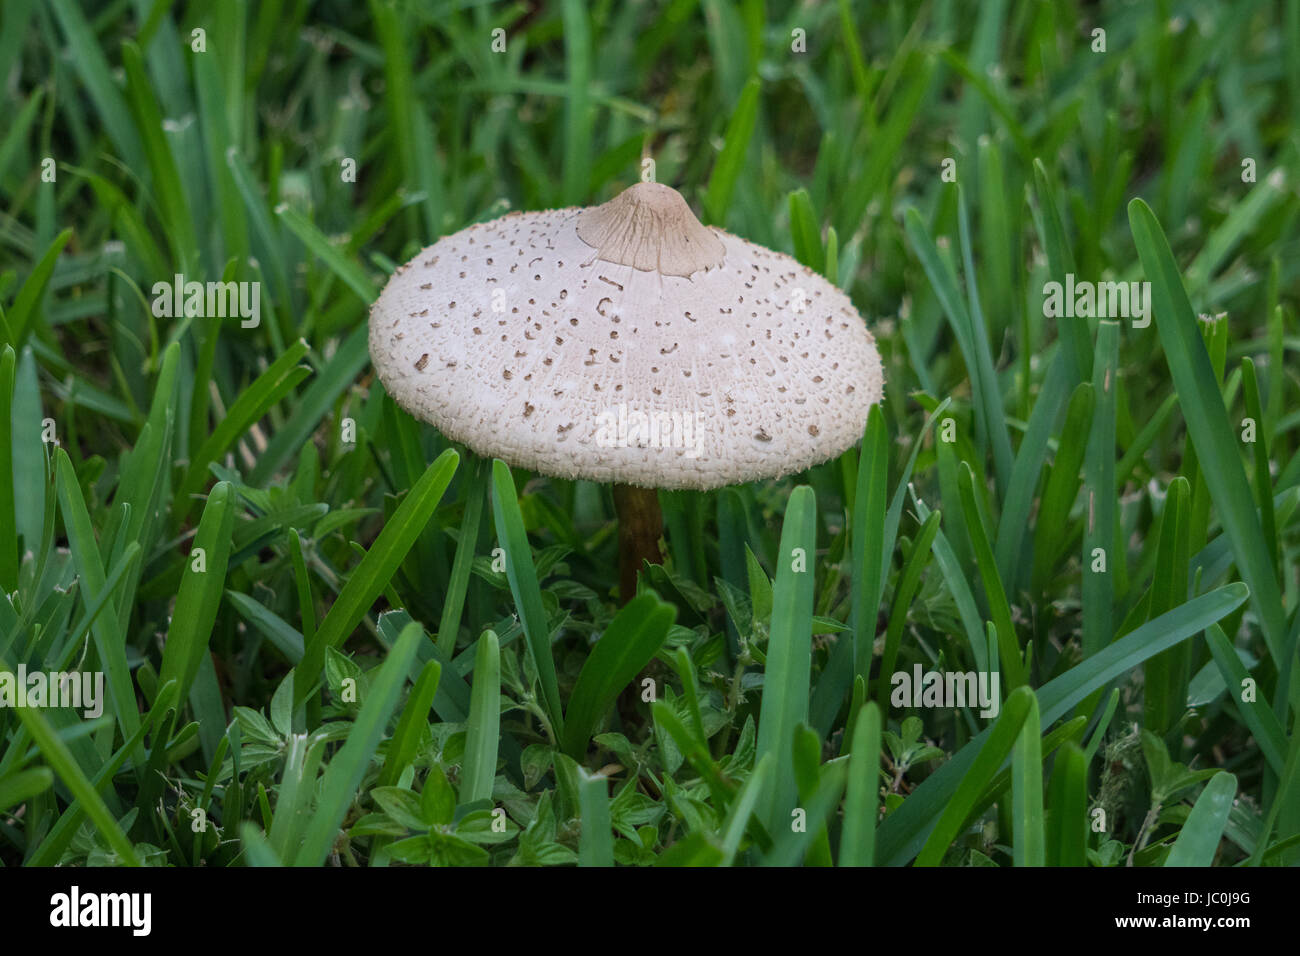 Mushroom growing in the grass Stock Photo